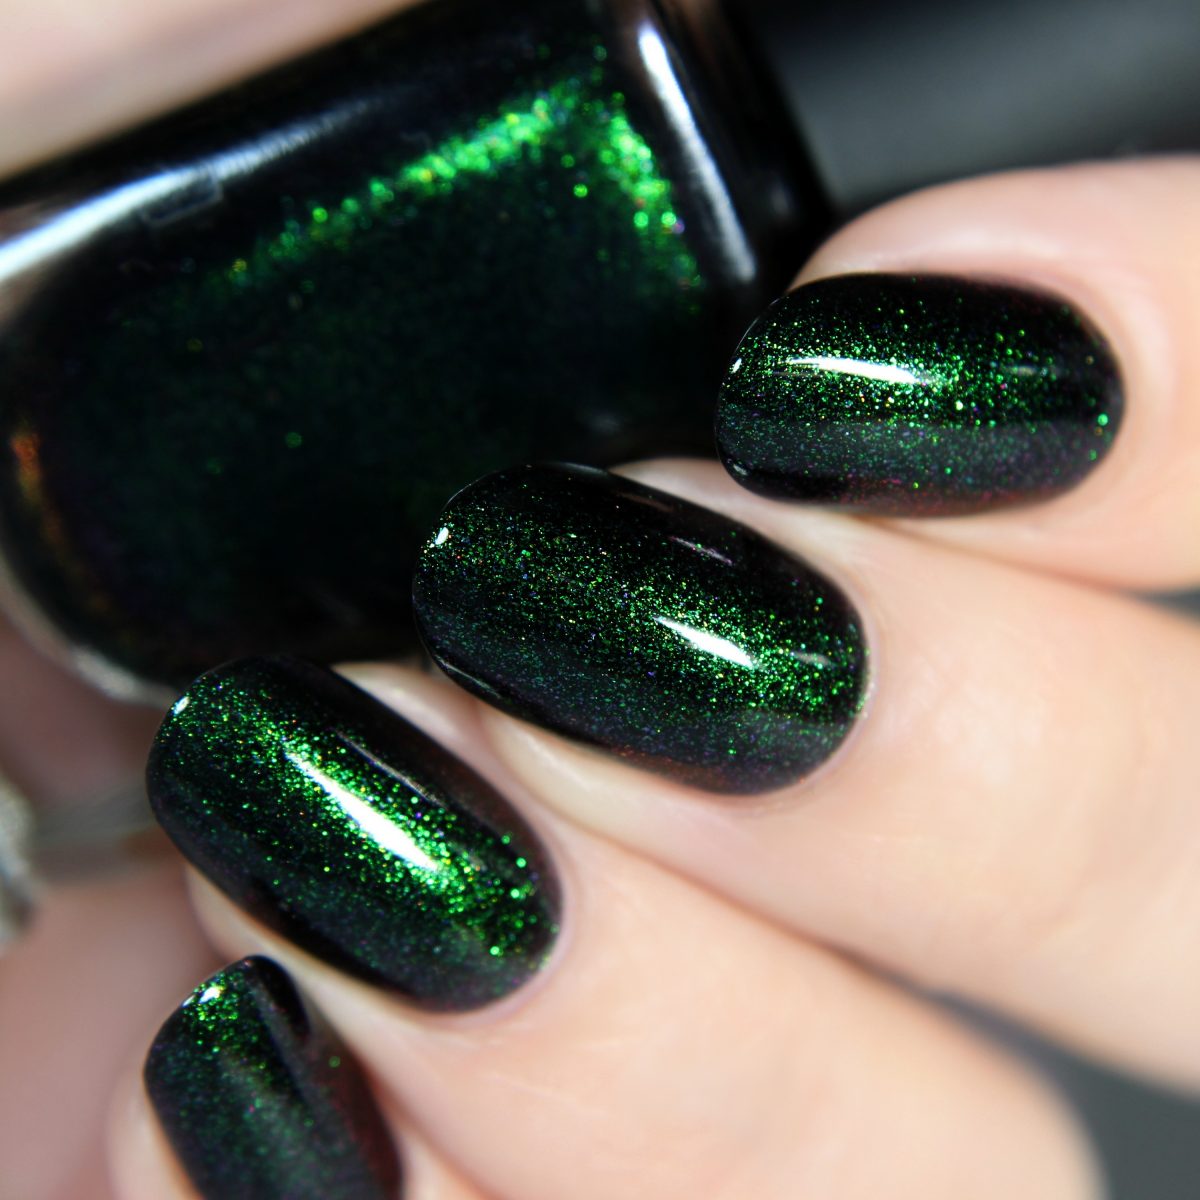 Salem - Rich Black Green Shimmer Nail Polish by ILNP